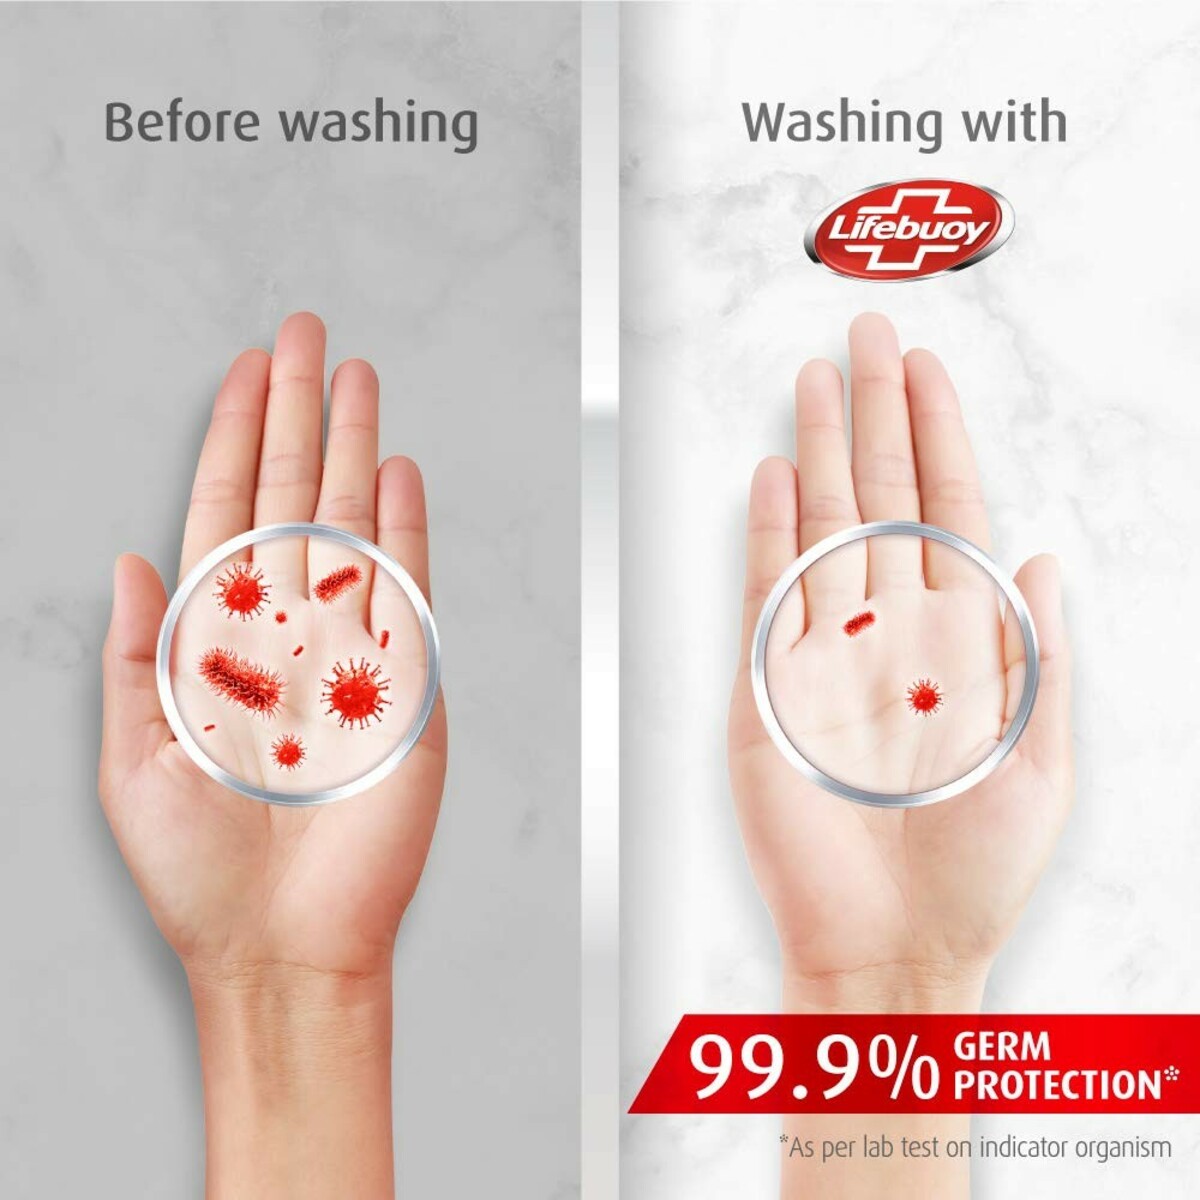 Lifebuoy  Hand Wash  Total  10 750ml 1+1